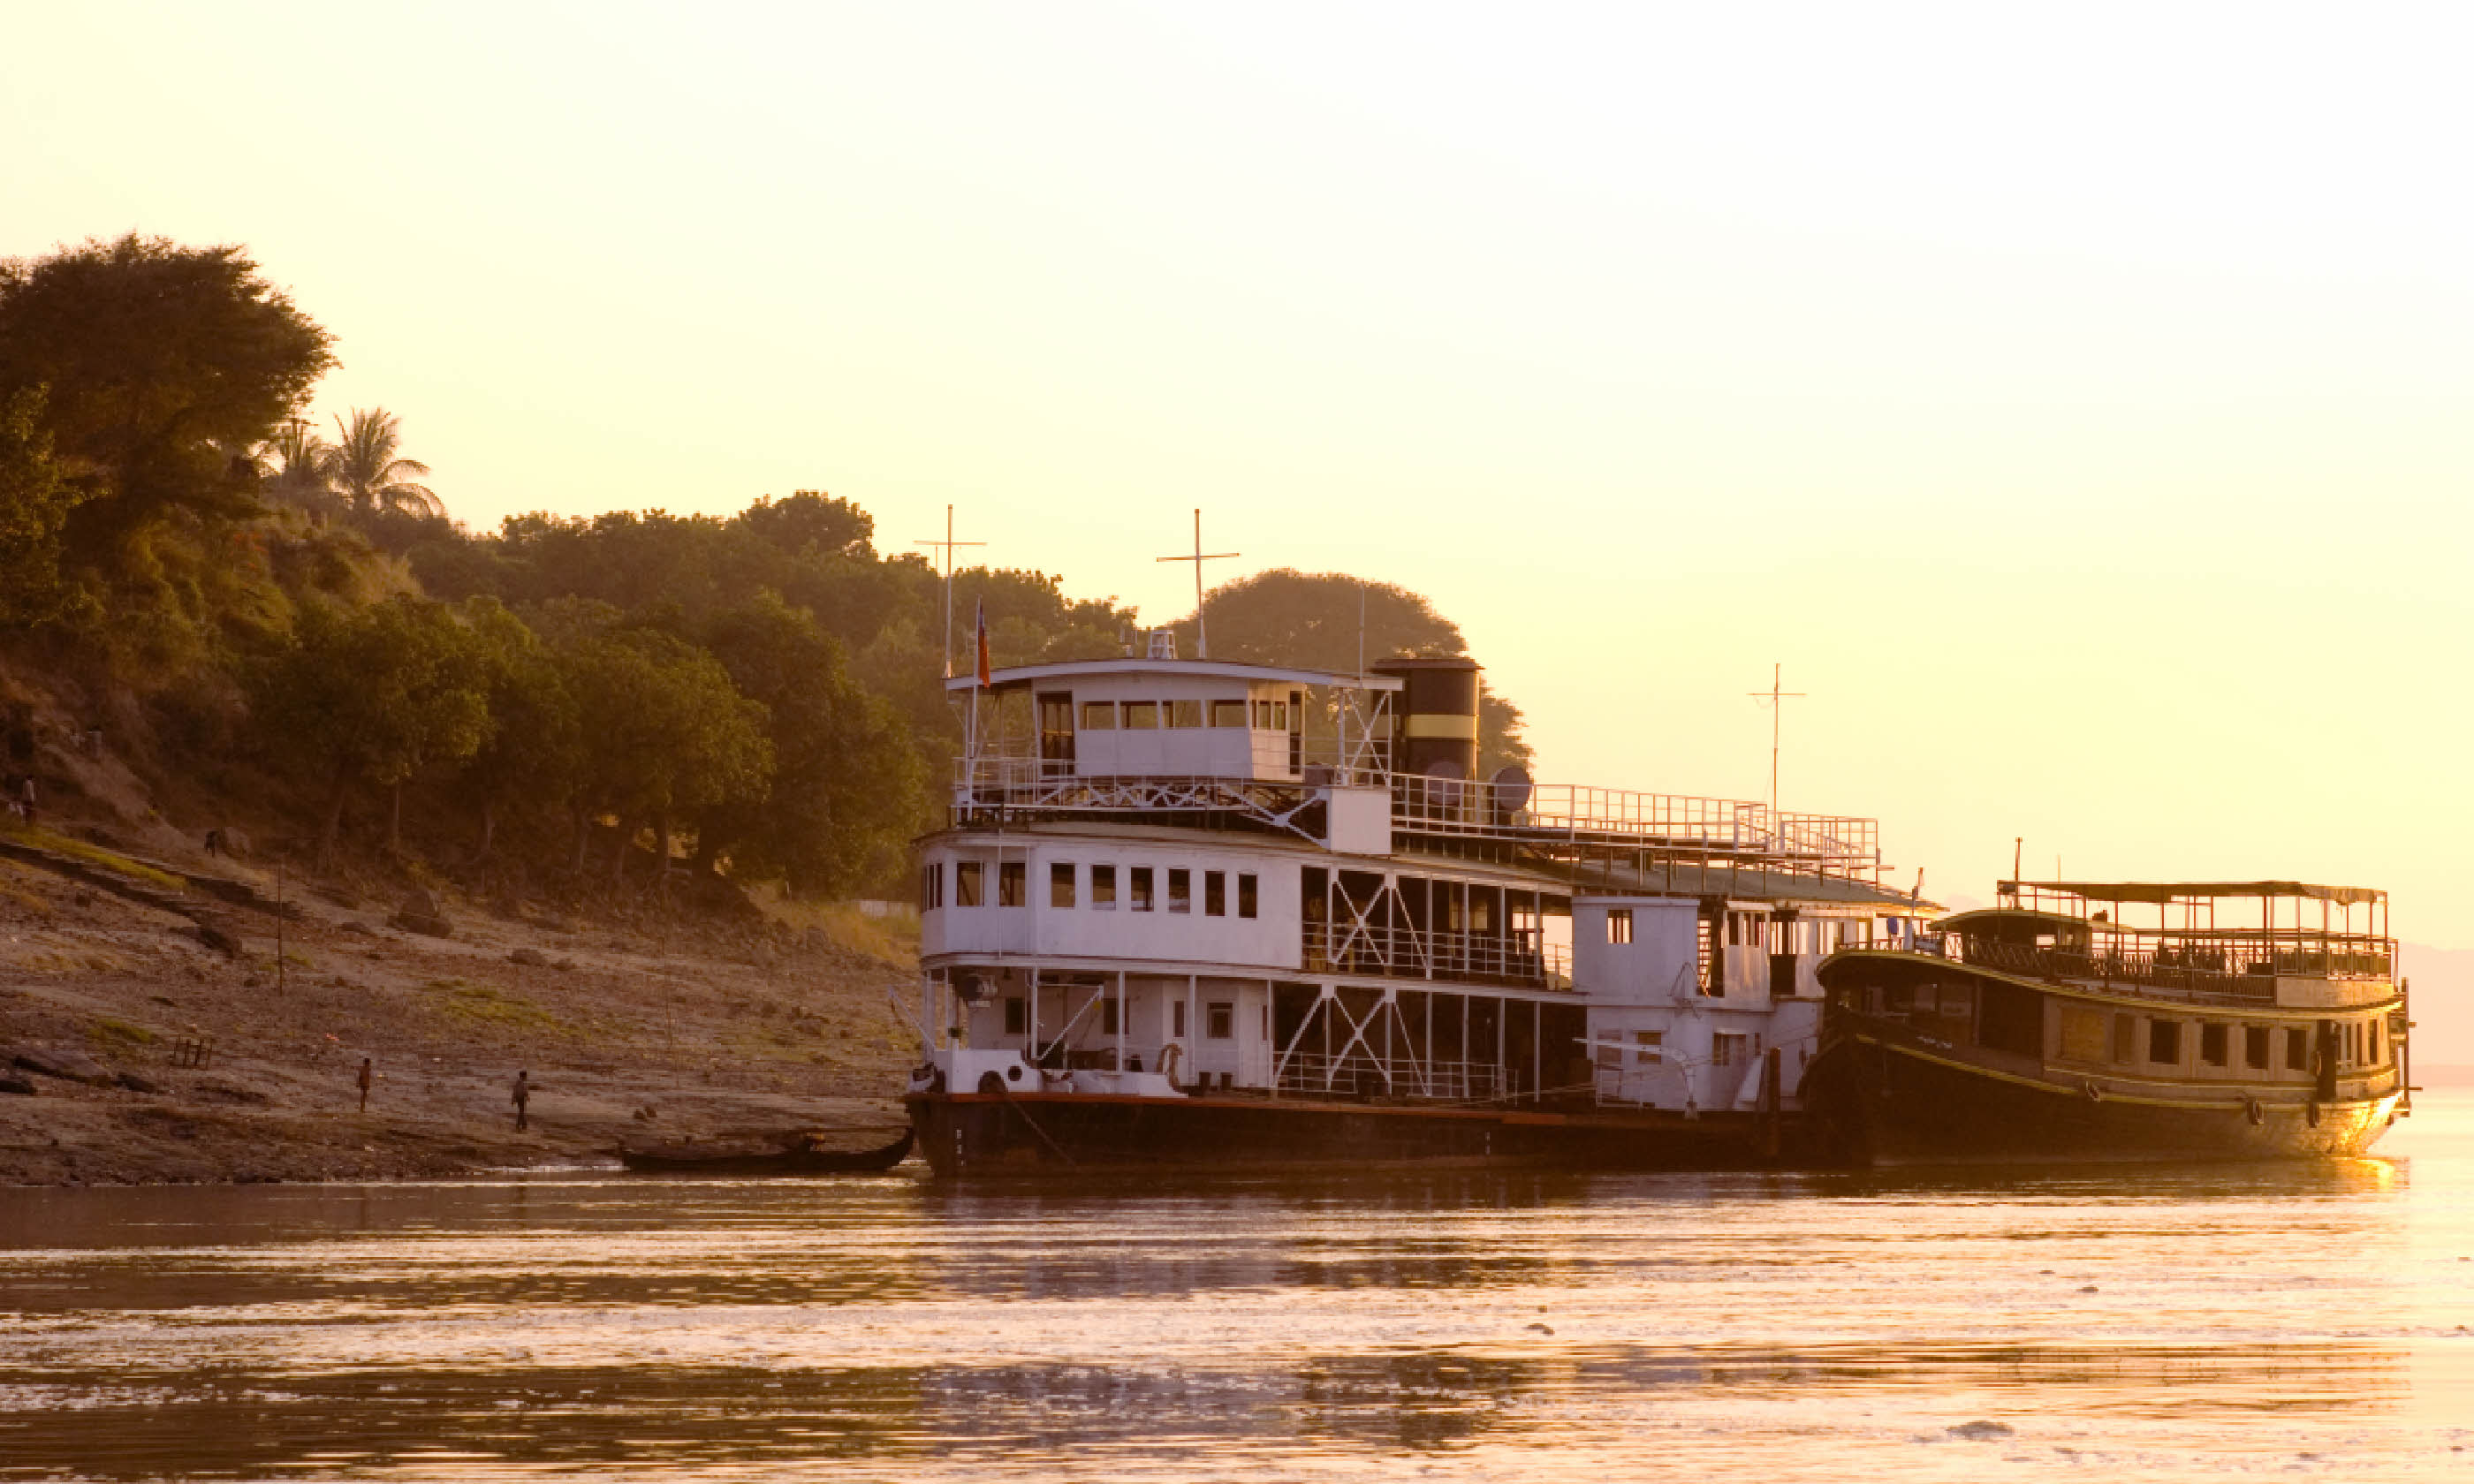 Sunset on the Irrawaddy (Shutterstock)